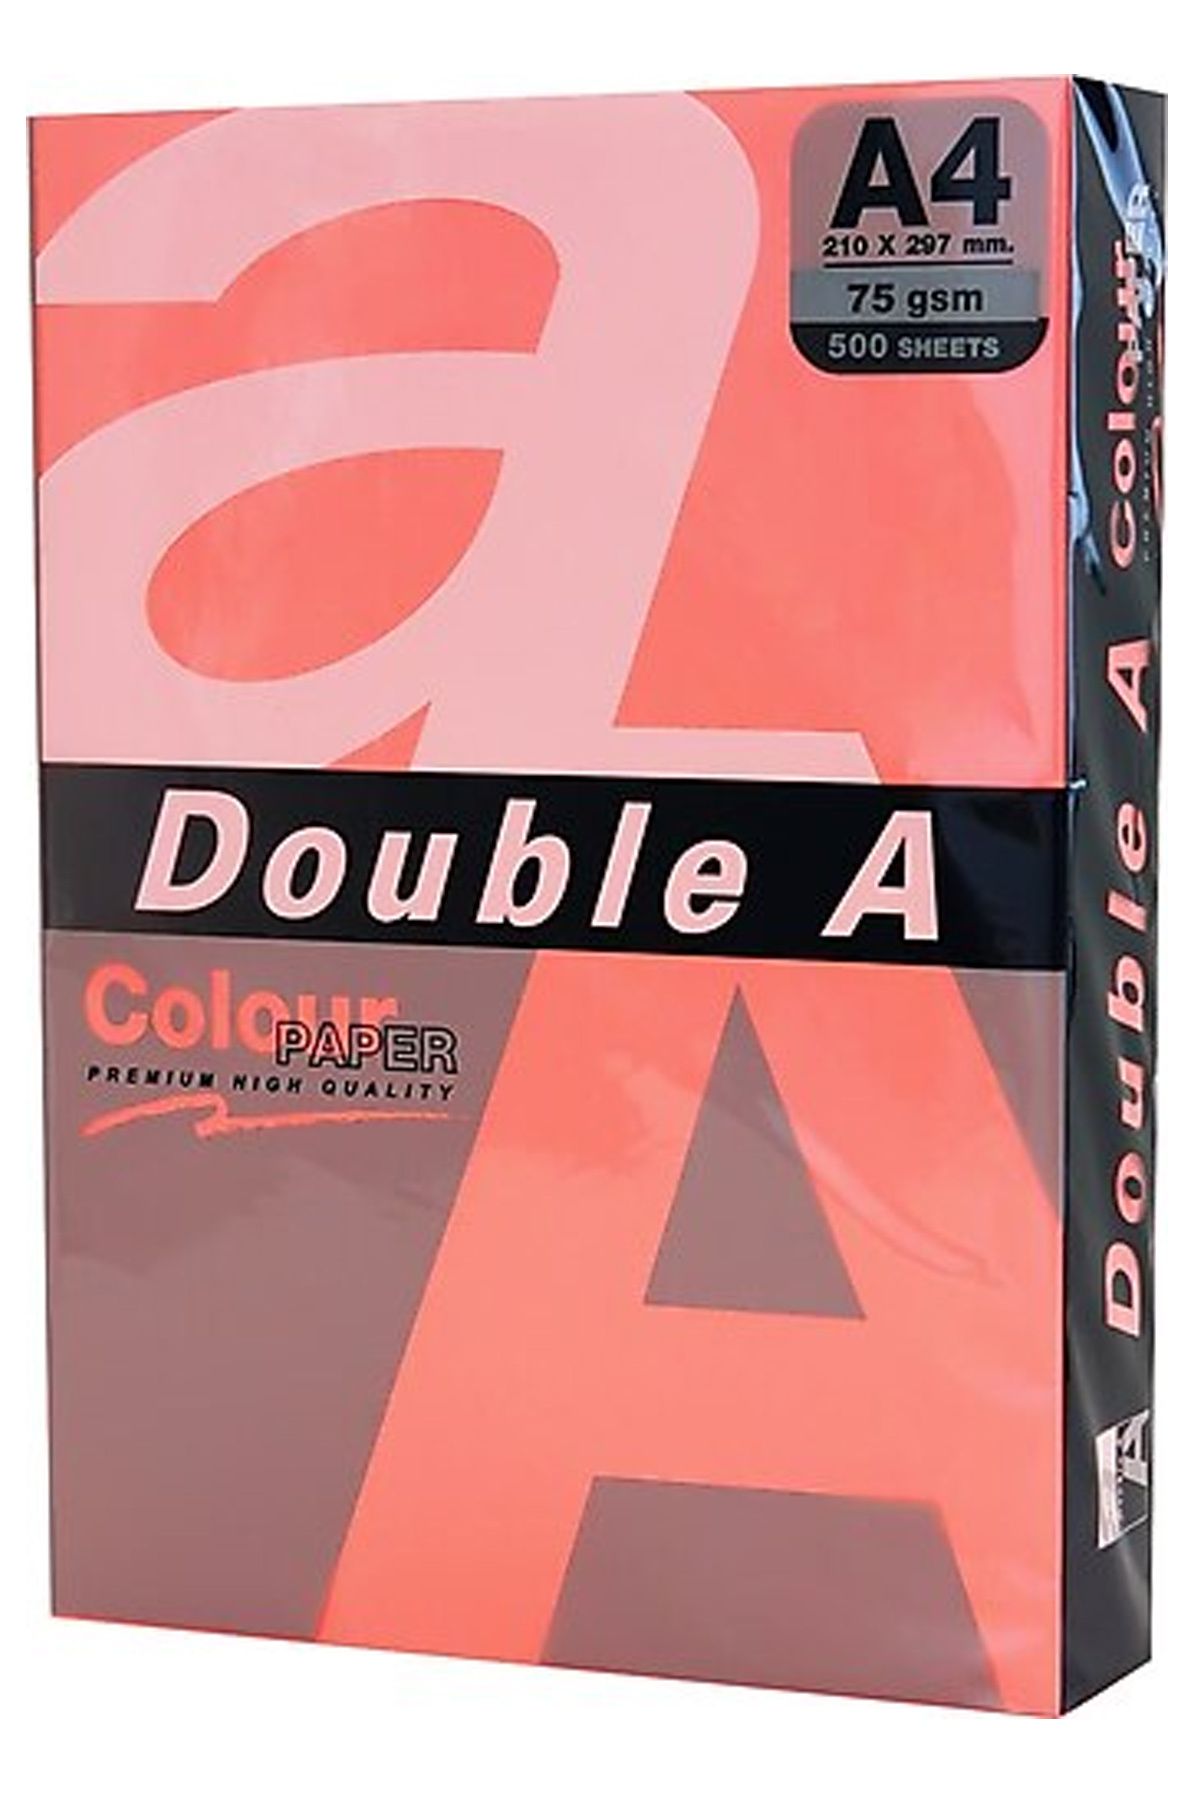 çakmer store Double A Renkli Fotokopi Kağıdı 500 LÜ A4 75 GR Fosforlu Punch